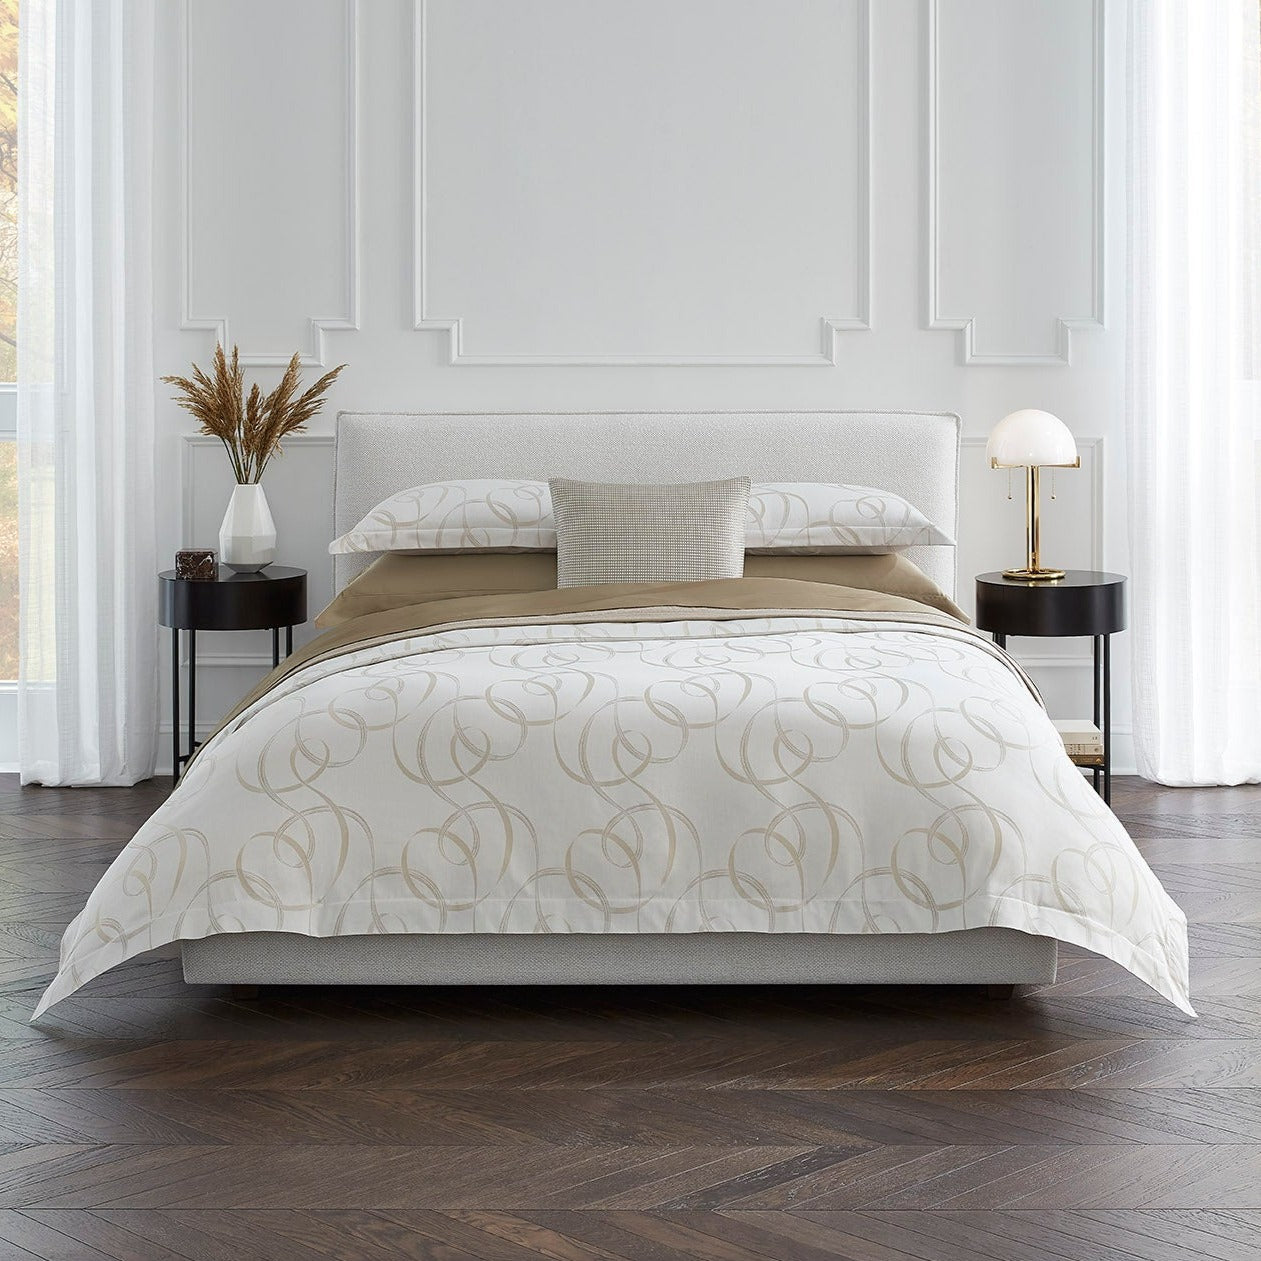 Caravino Bed Linens